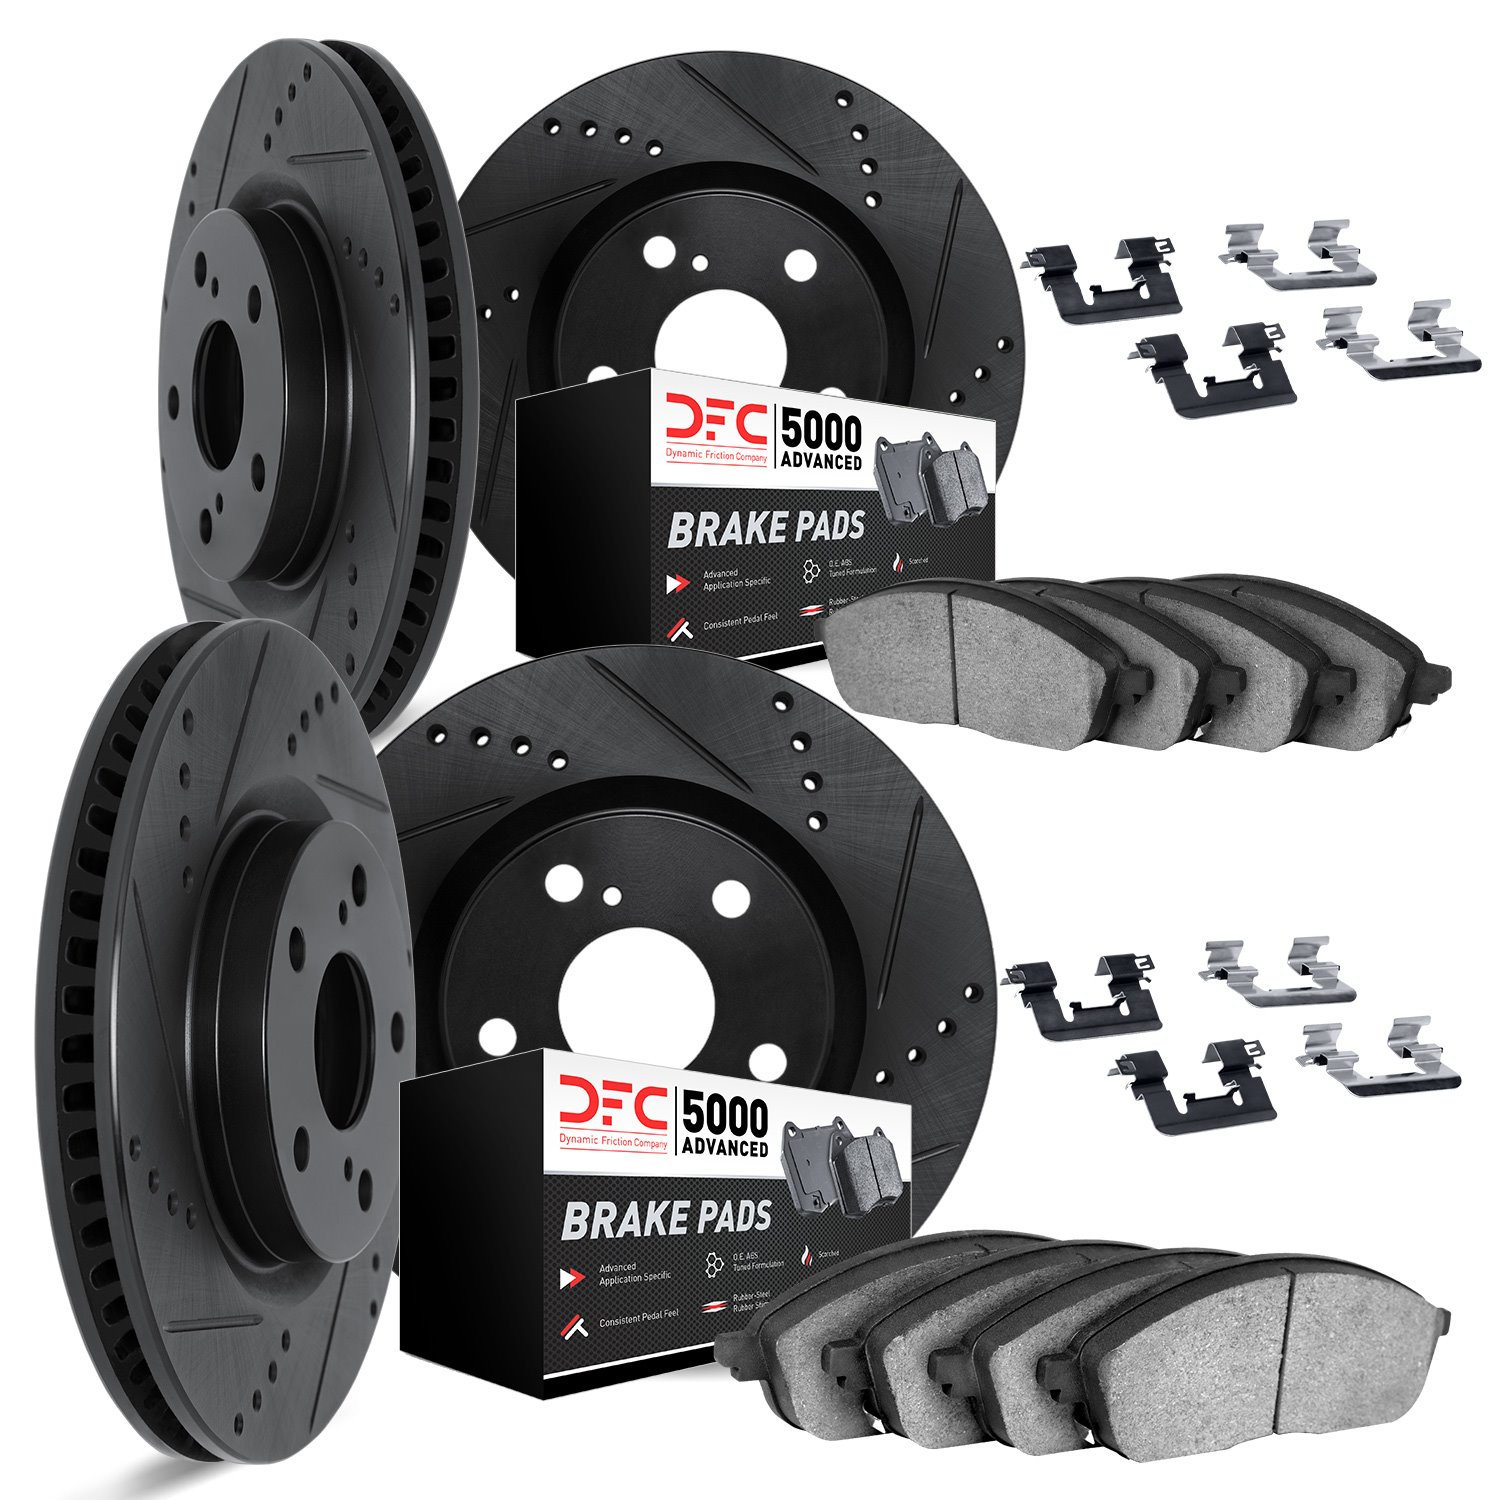 8514-67121 Drilled/Slotted Brake Rotors w/5000 Advanced Brake Pads Kit & Hardware [Black], Fits Select Infiniti/Nissan, Position